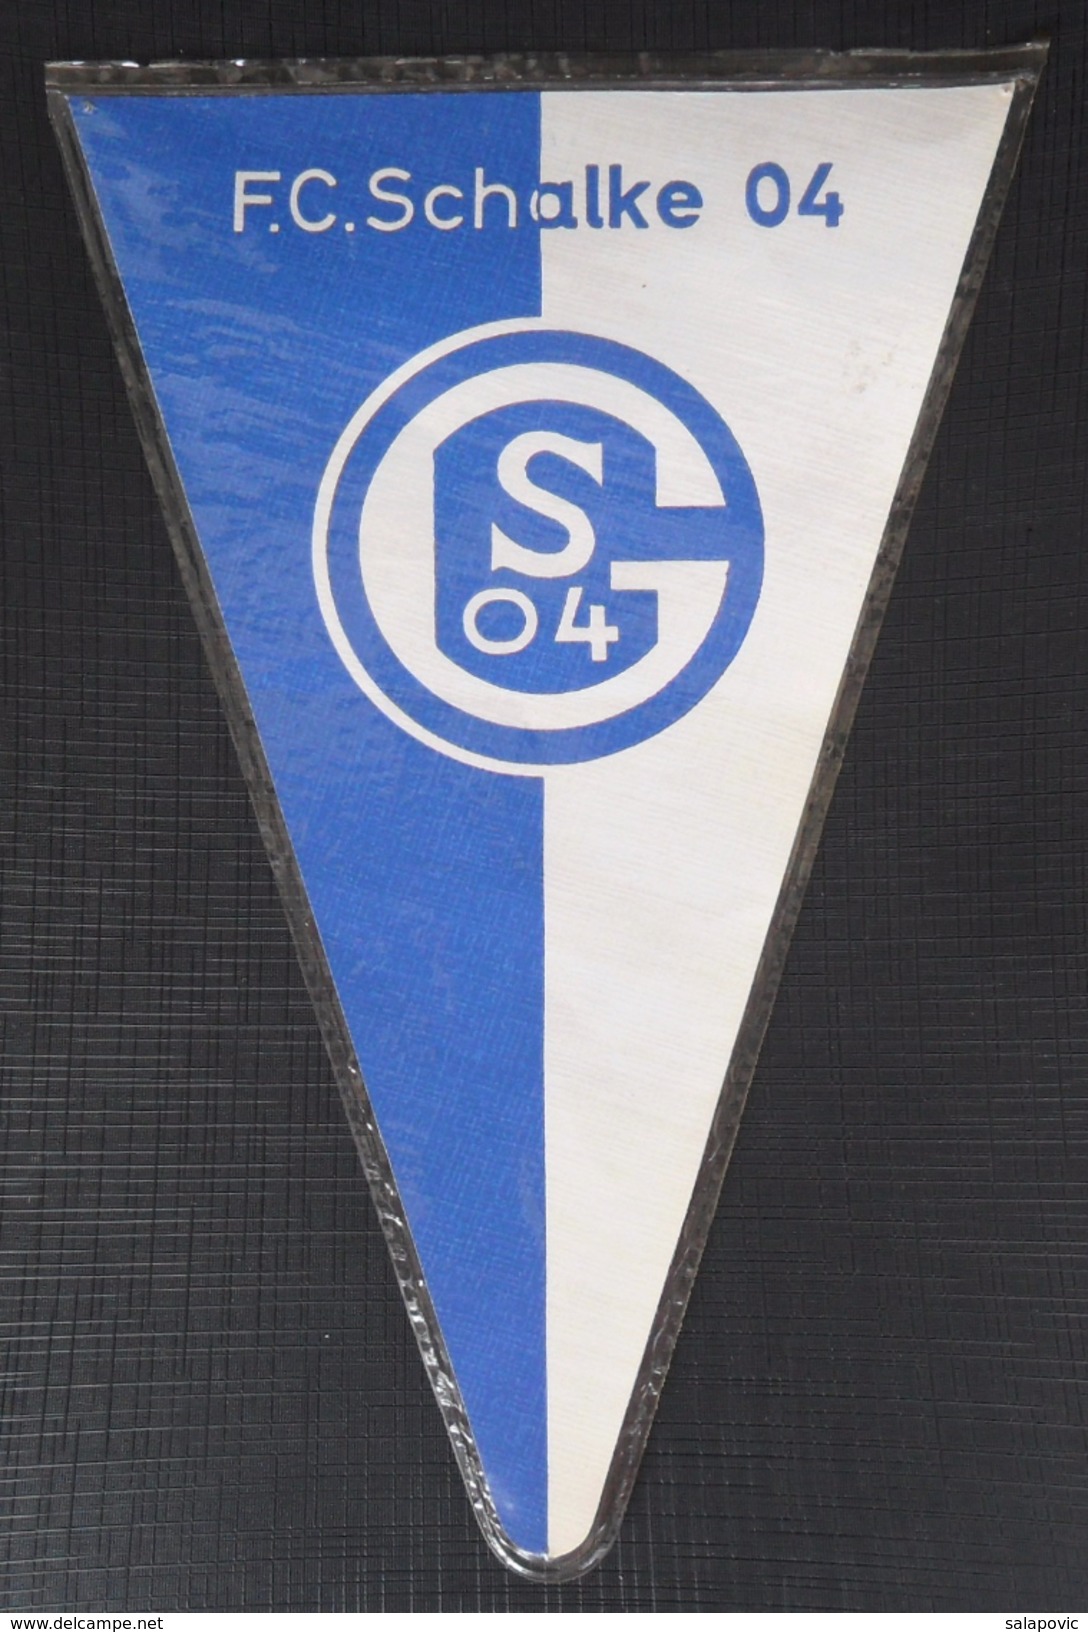 FC Gelsenkirchen-Schalke 04 GERMANY FOOTBALL CLUB, SOCCER / FUTBOL / CALCIO OLD PENNANT, SPORTS FLAG - Uniformes Recordatorios & Misc